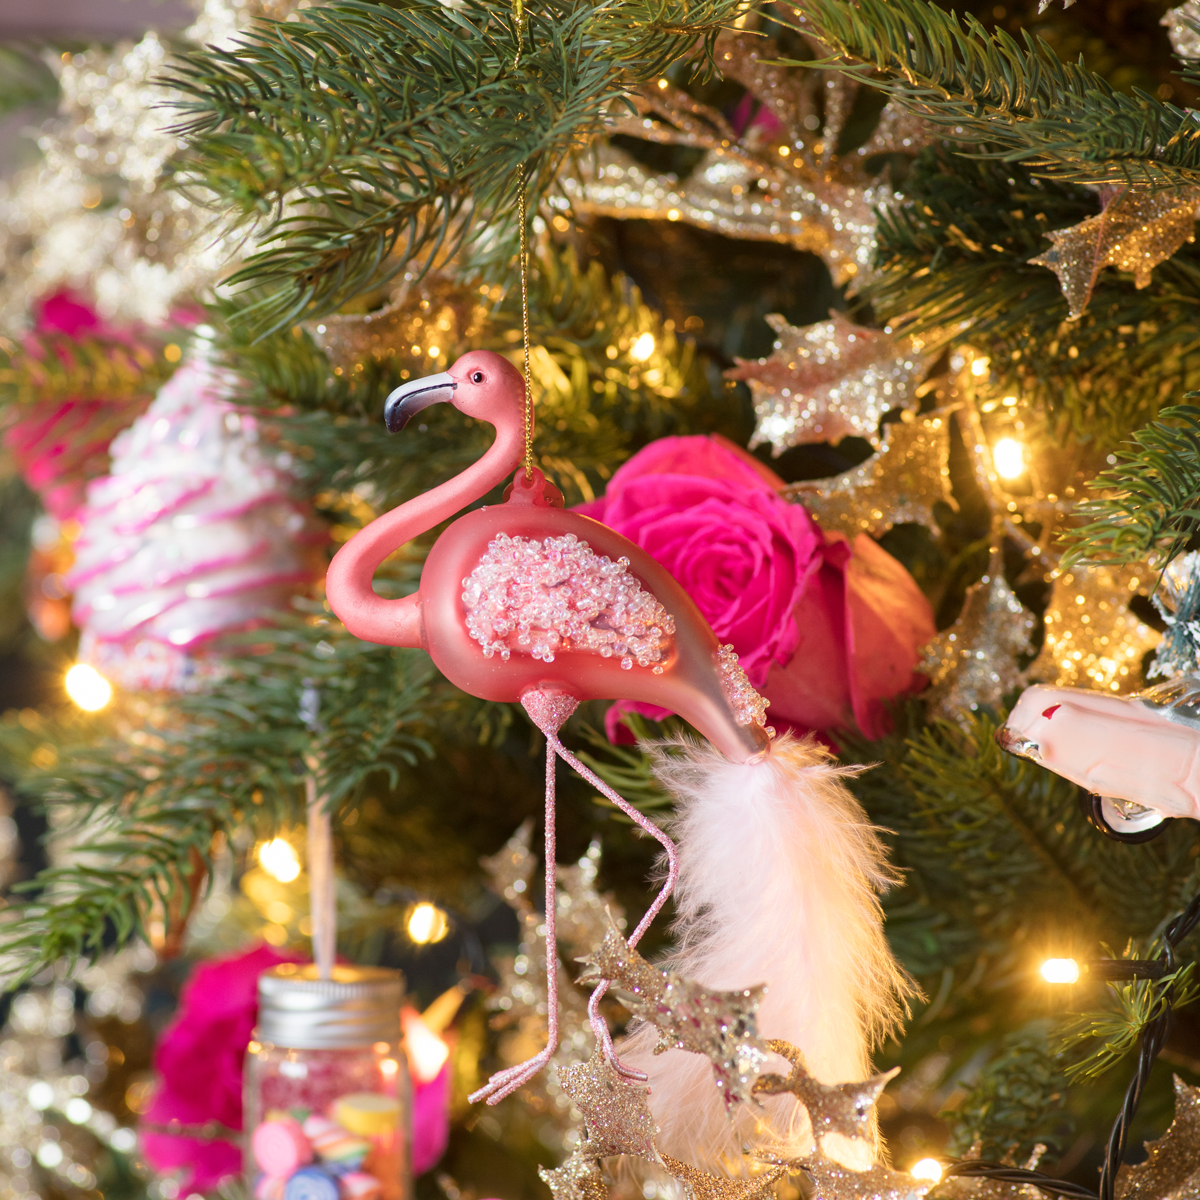 Flamingo Christmas tree decoration from Amara